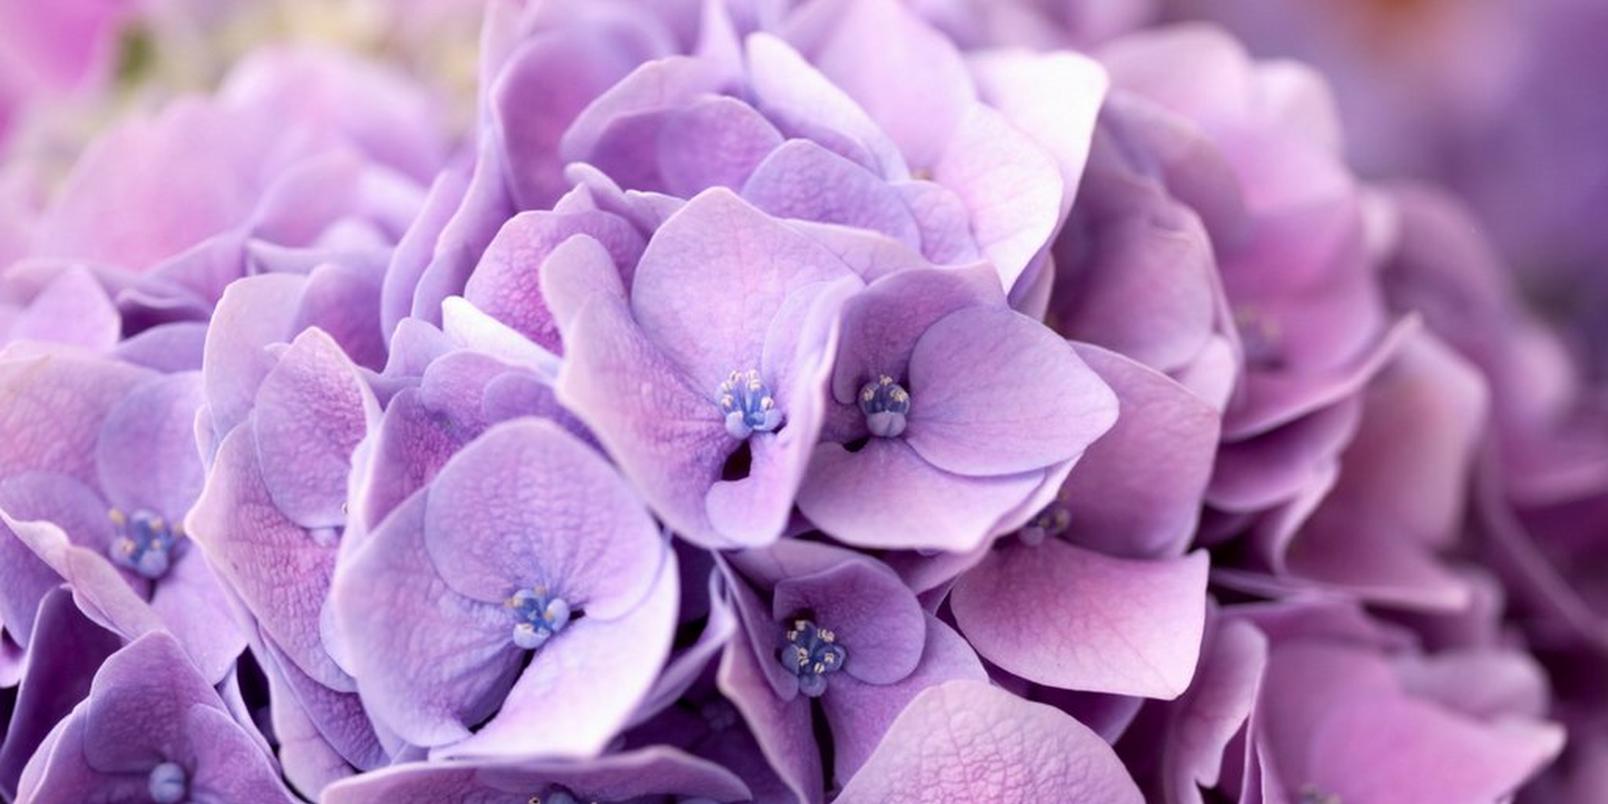 hydrangea-close-up-purple-flowers